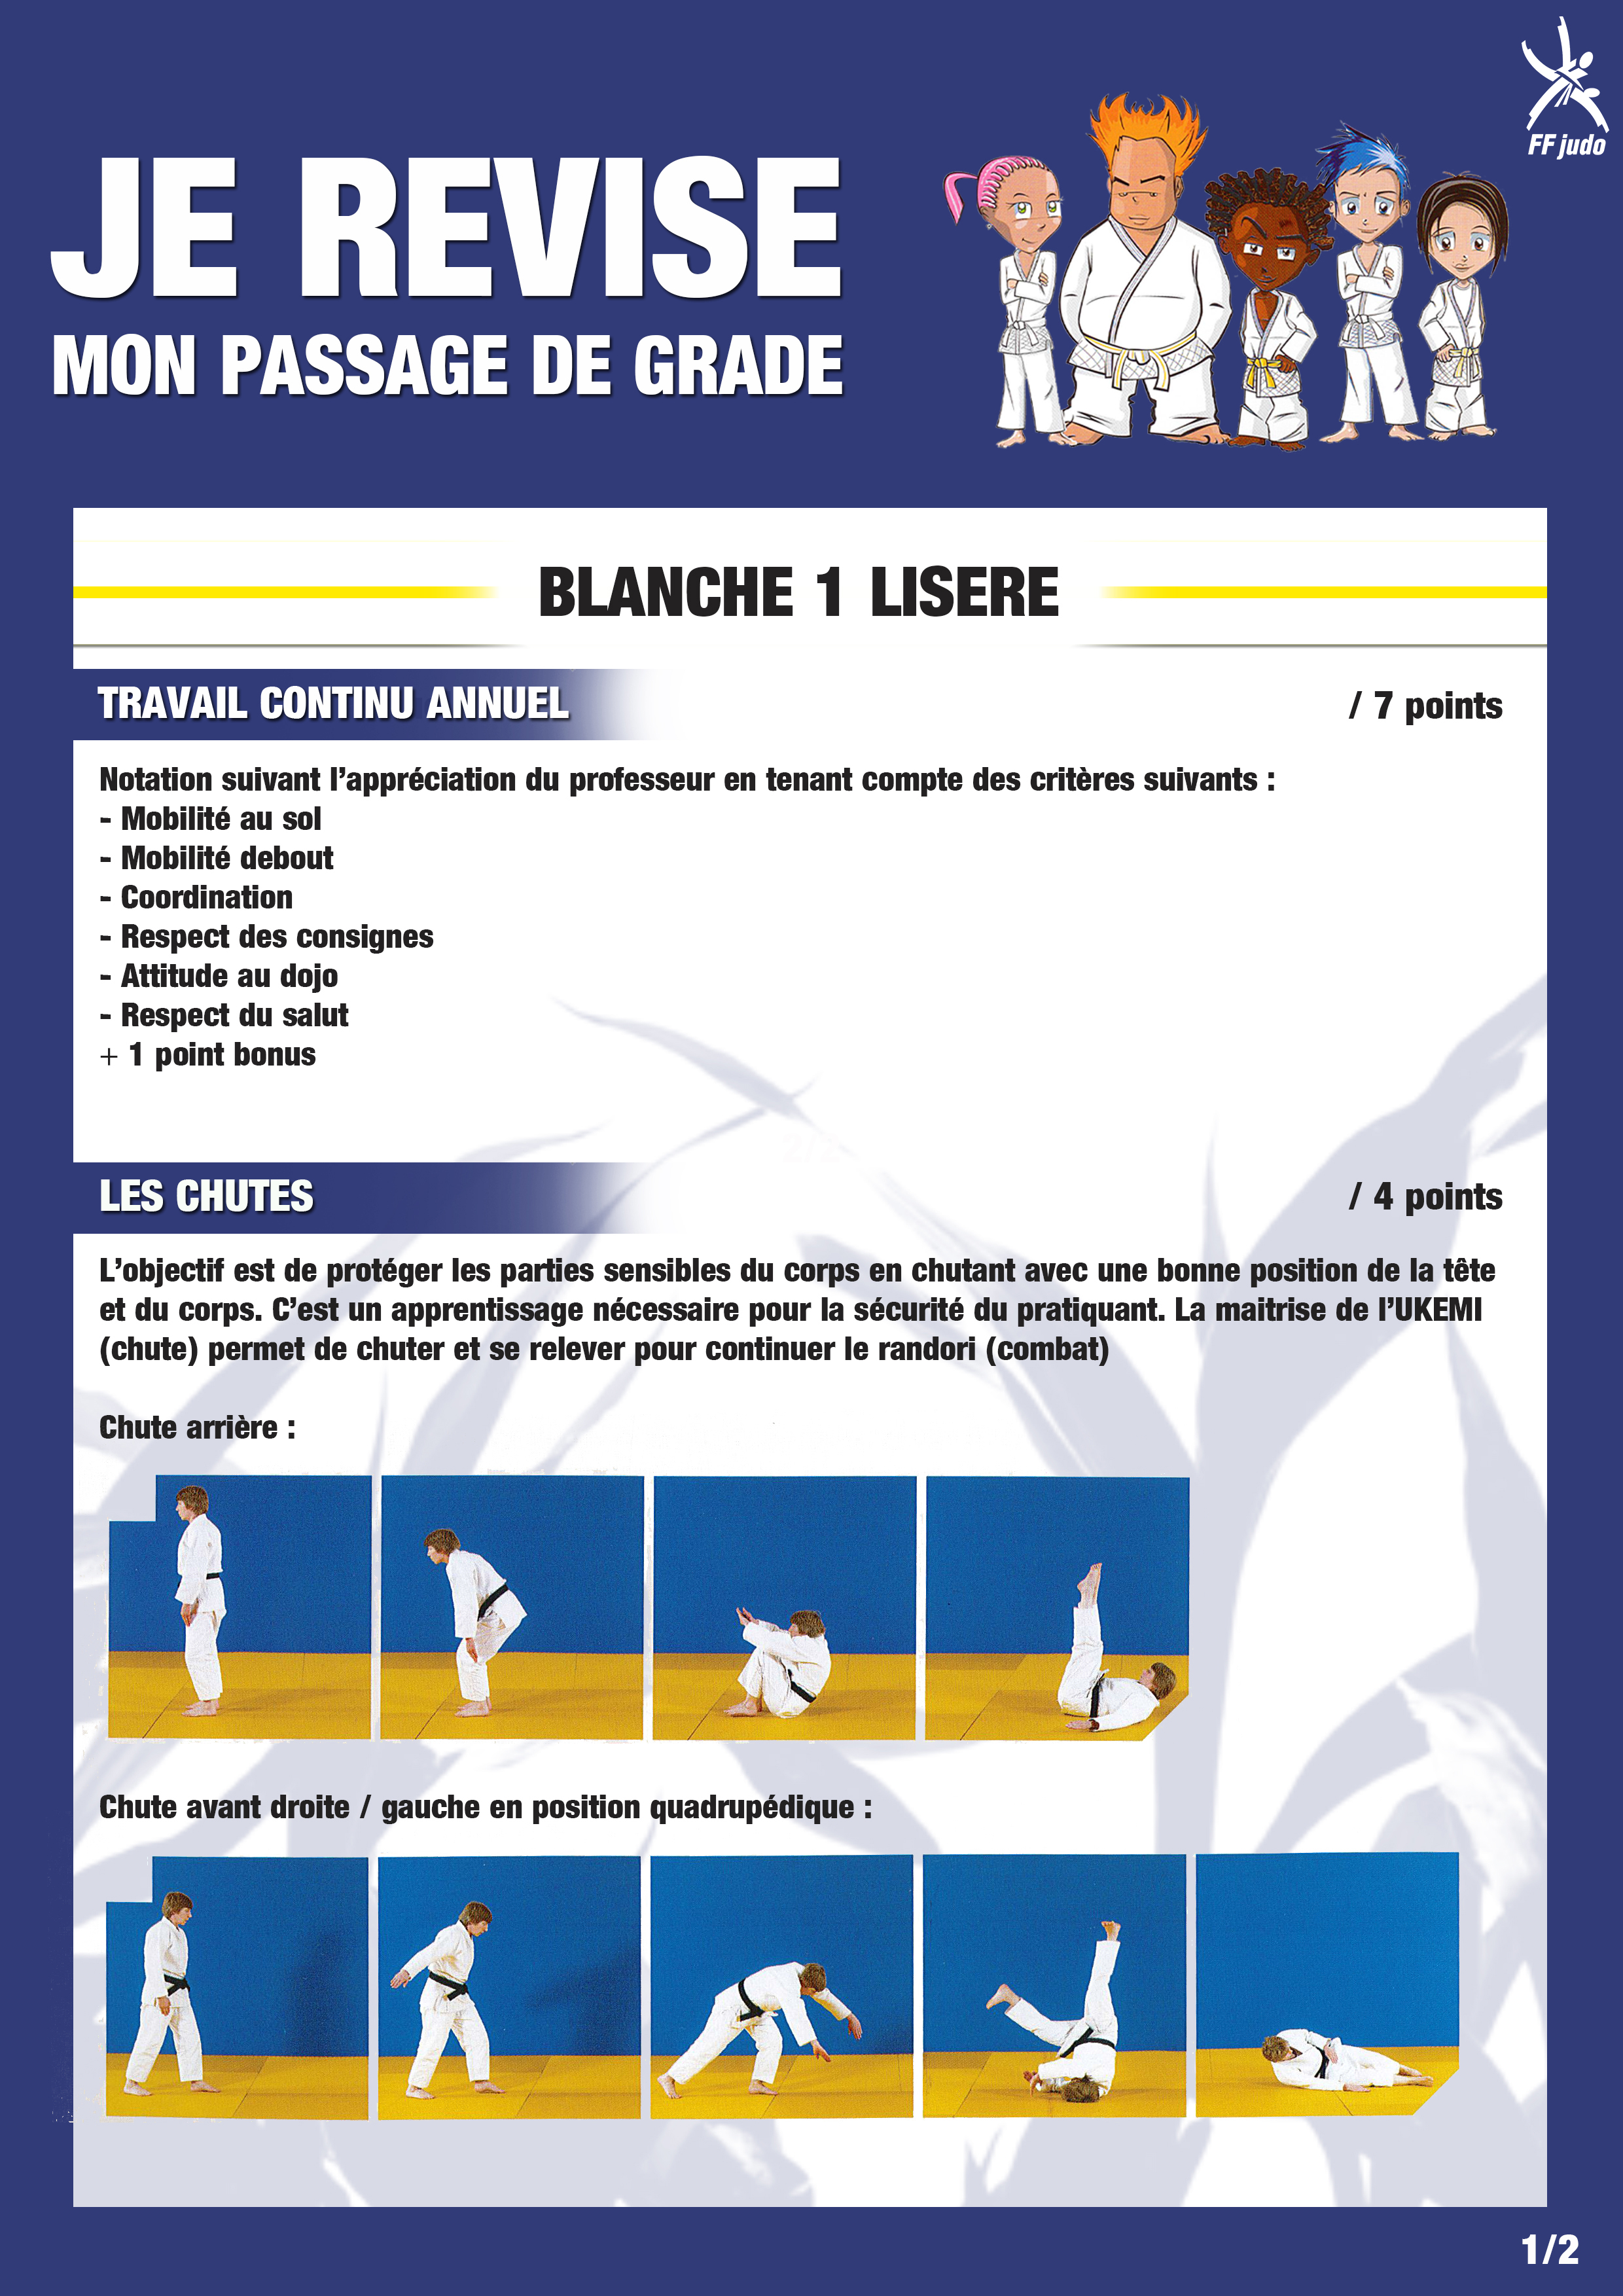 Passage de grade; Ceinture Blanche 1 liseré - Judo Club Steenvoorde